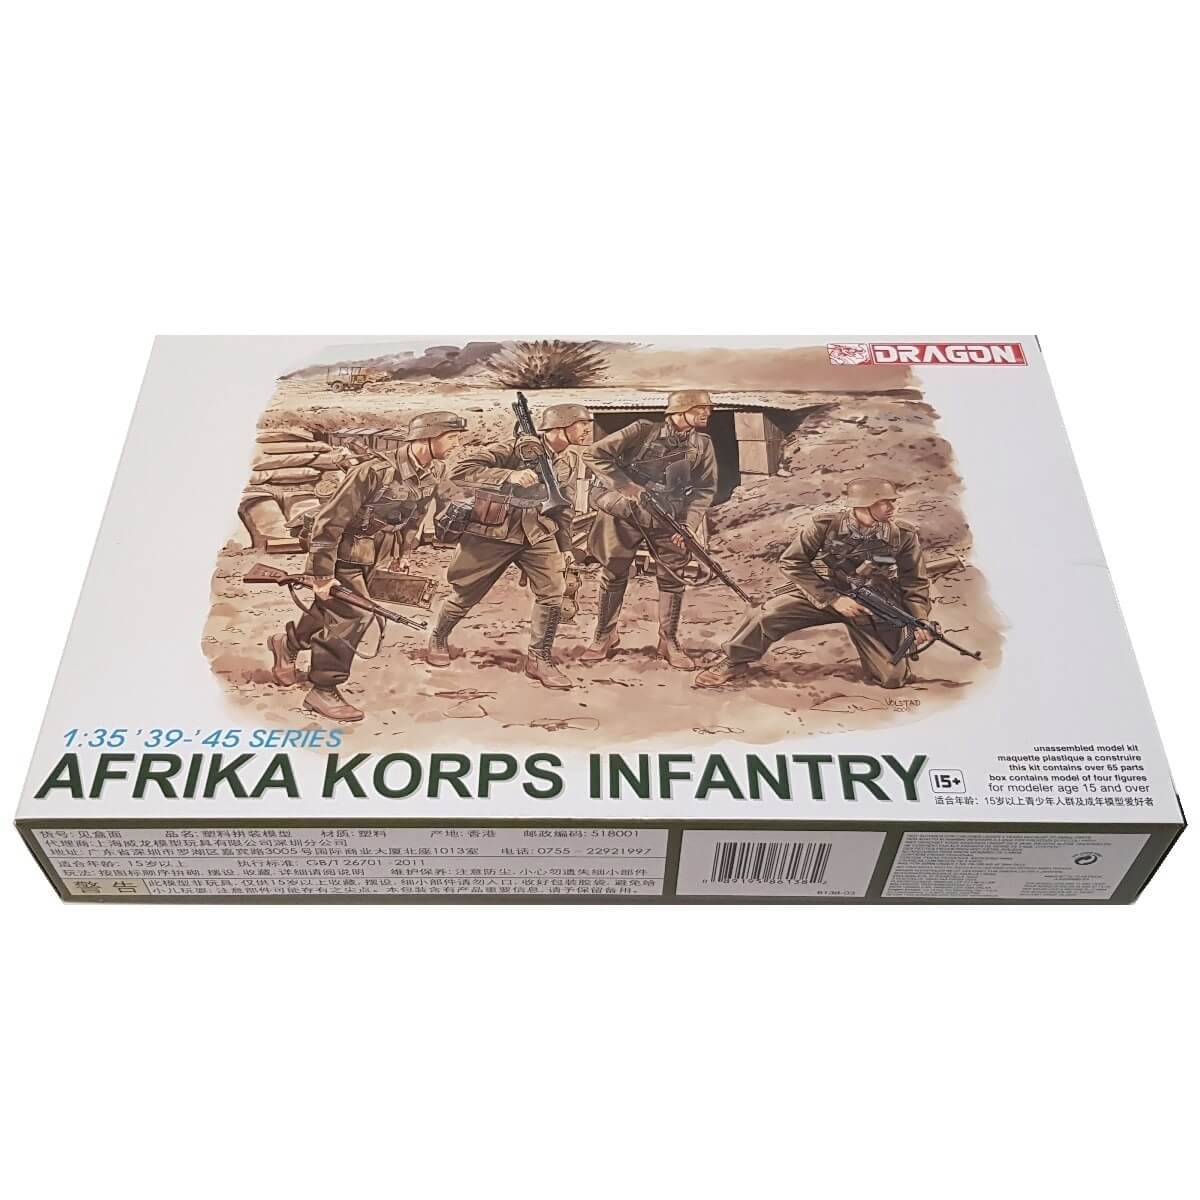 1:35 Afrika Korps Infantry - DRAGON